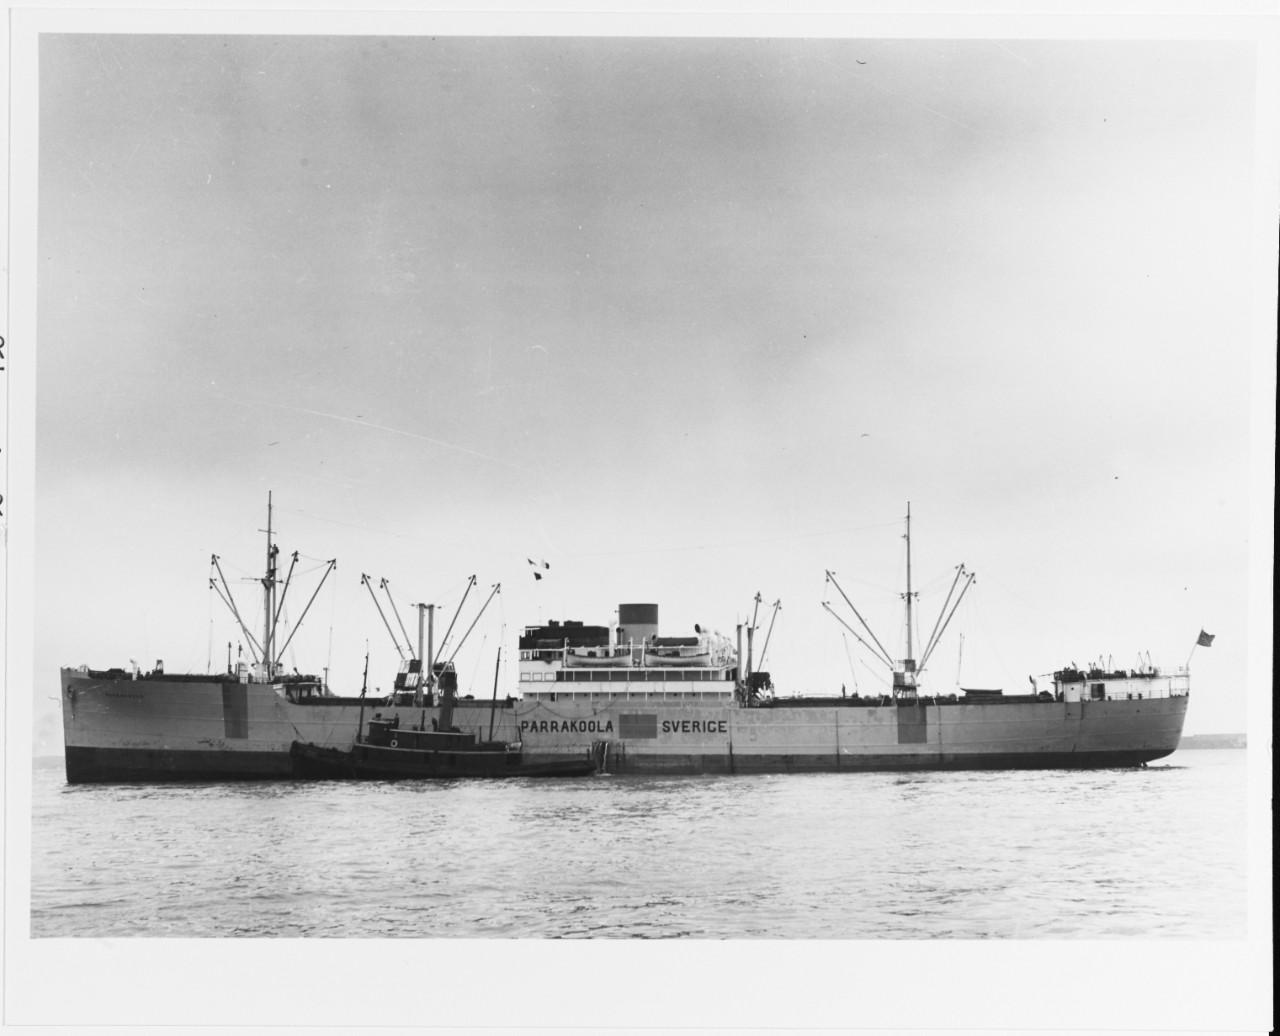 M.V. PARRAKOOLA (Swedish Merchant Freighter, 1928-1964)